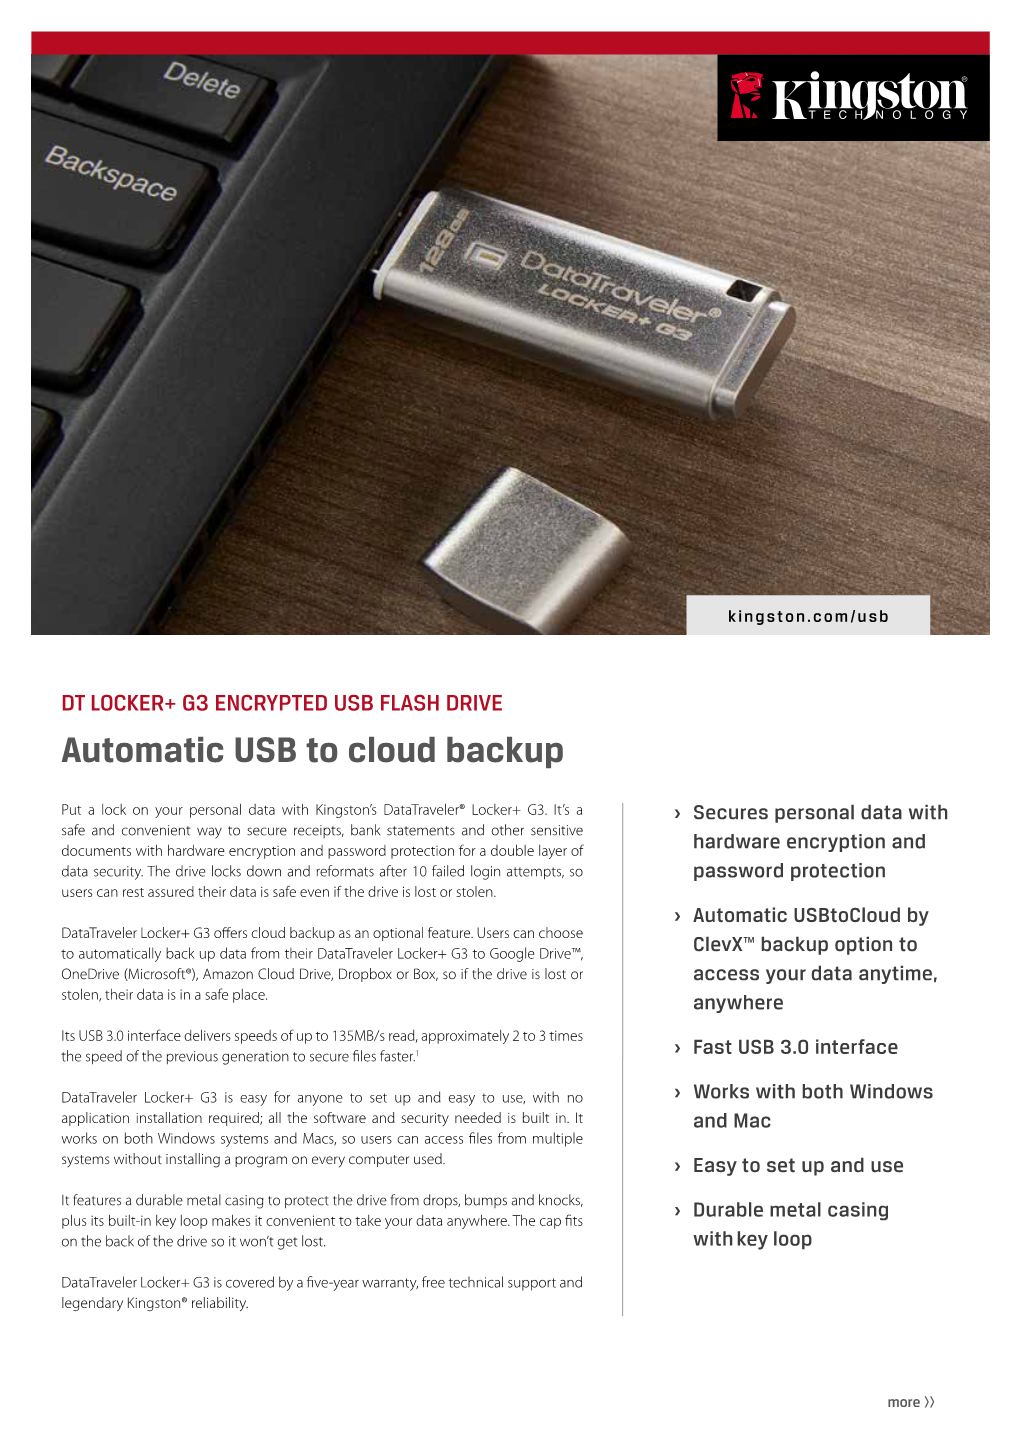 Automatic USB to Cloud Backup